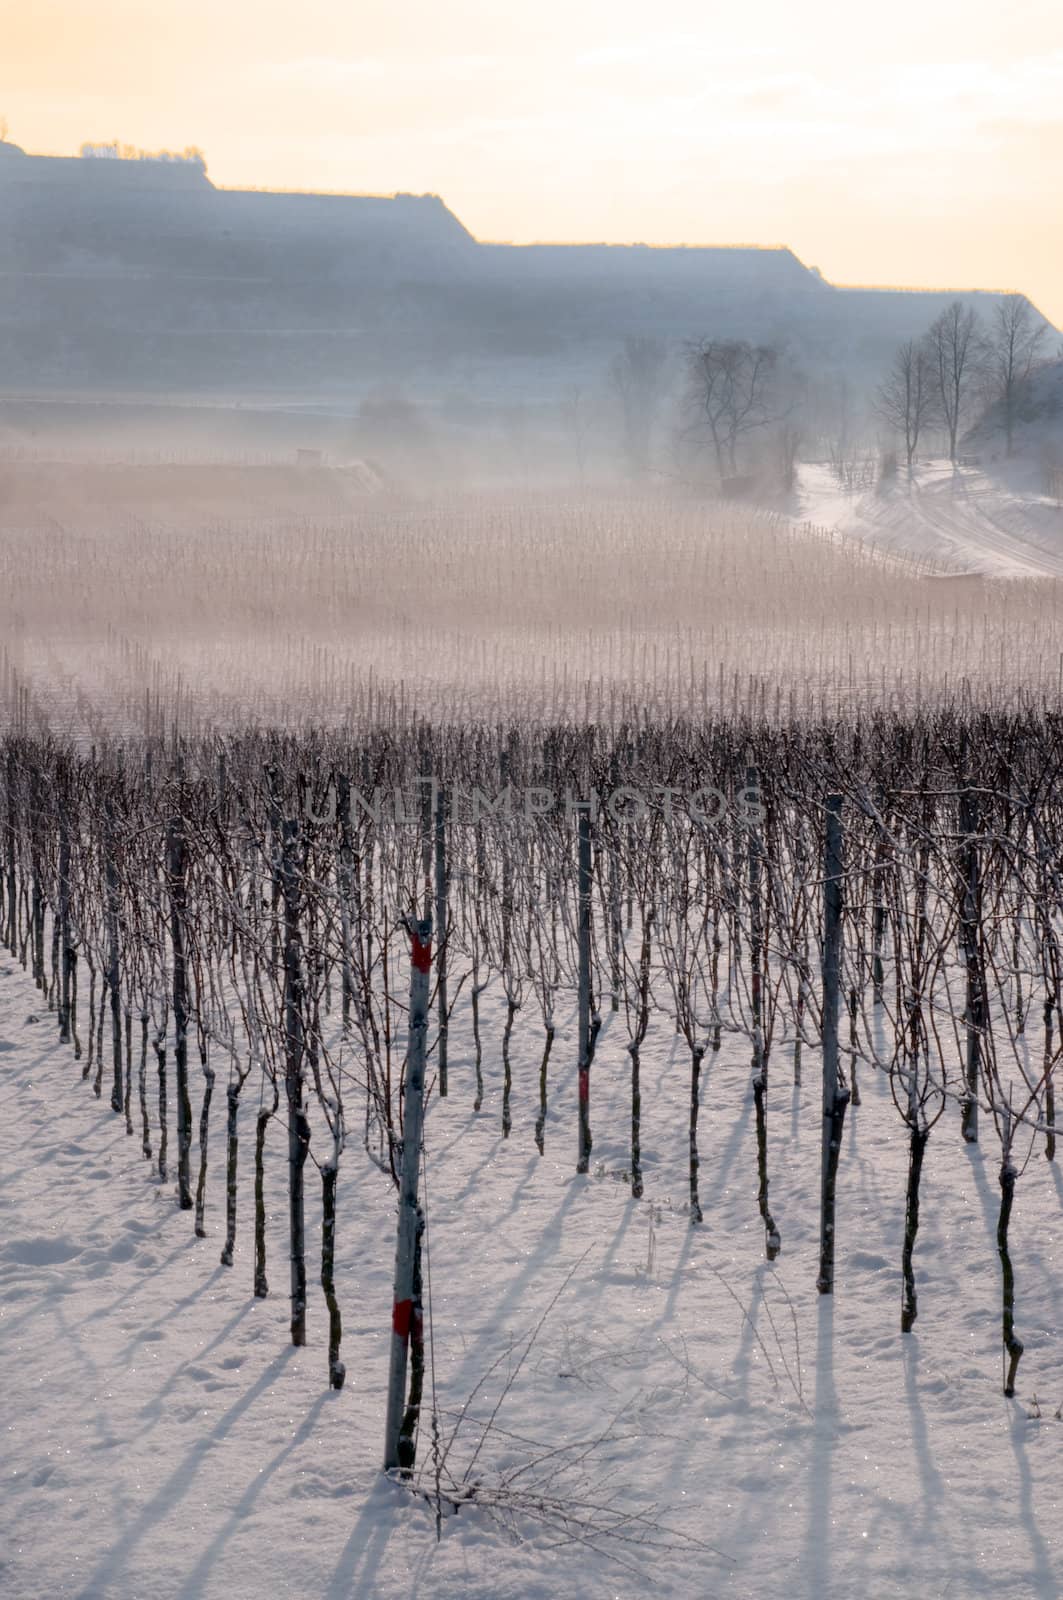 Vineyard landscape in winter by sunset